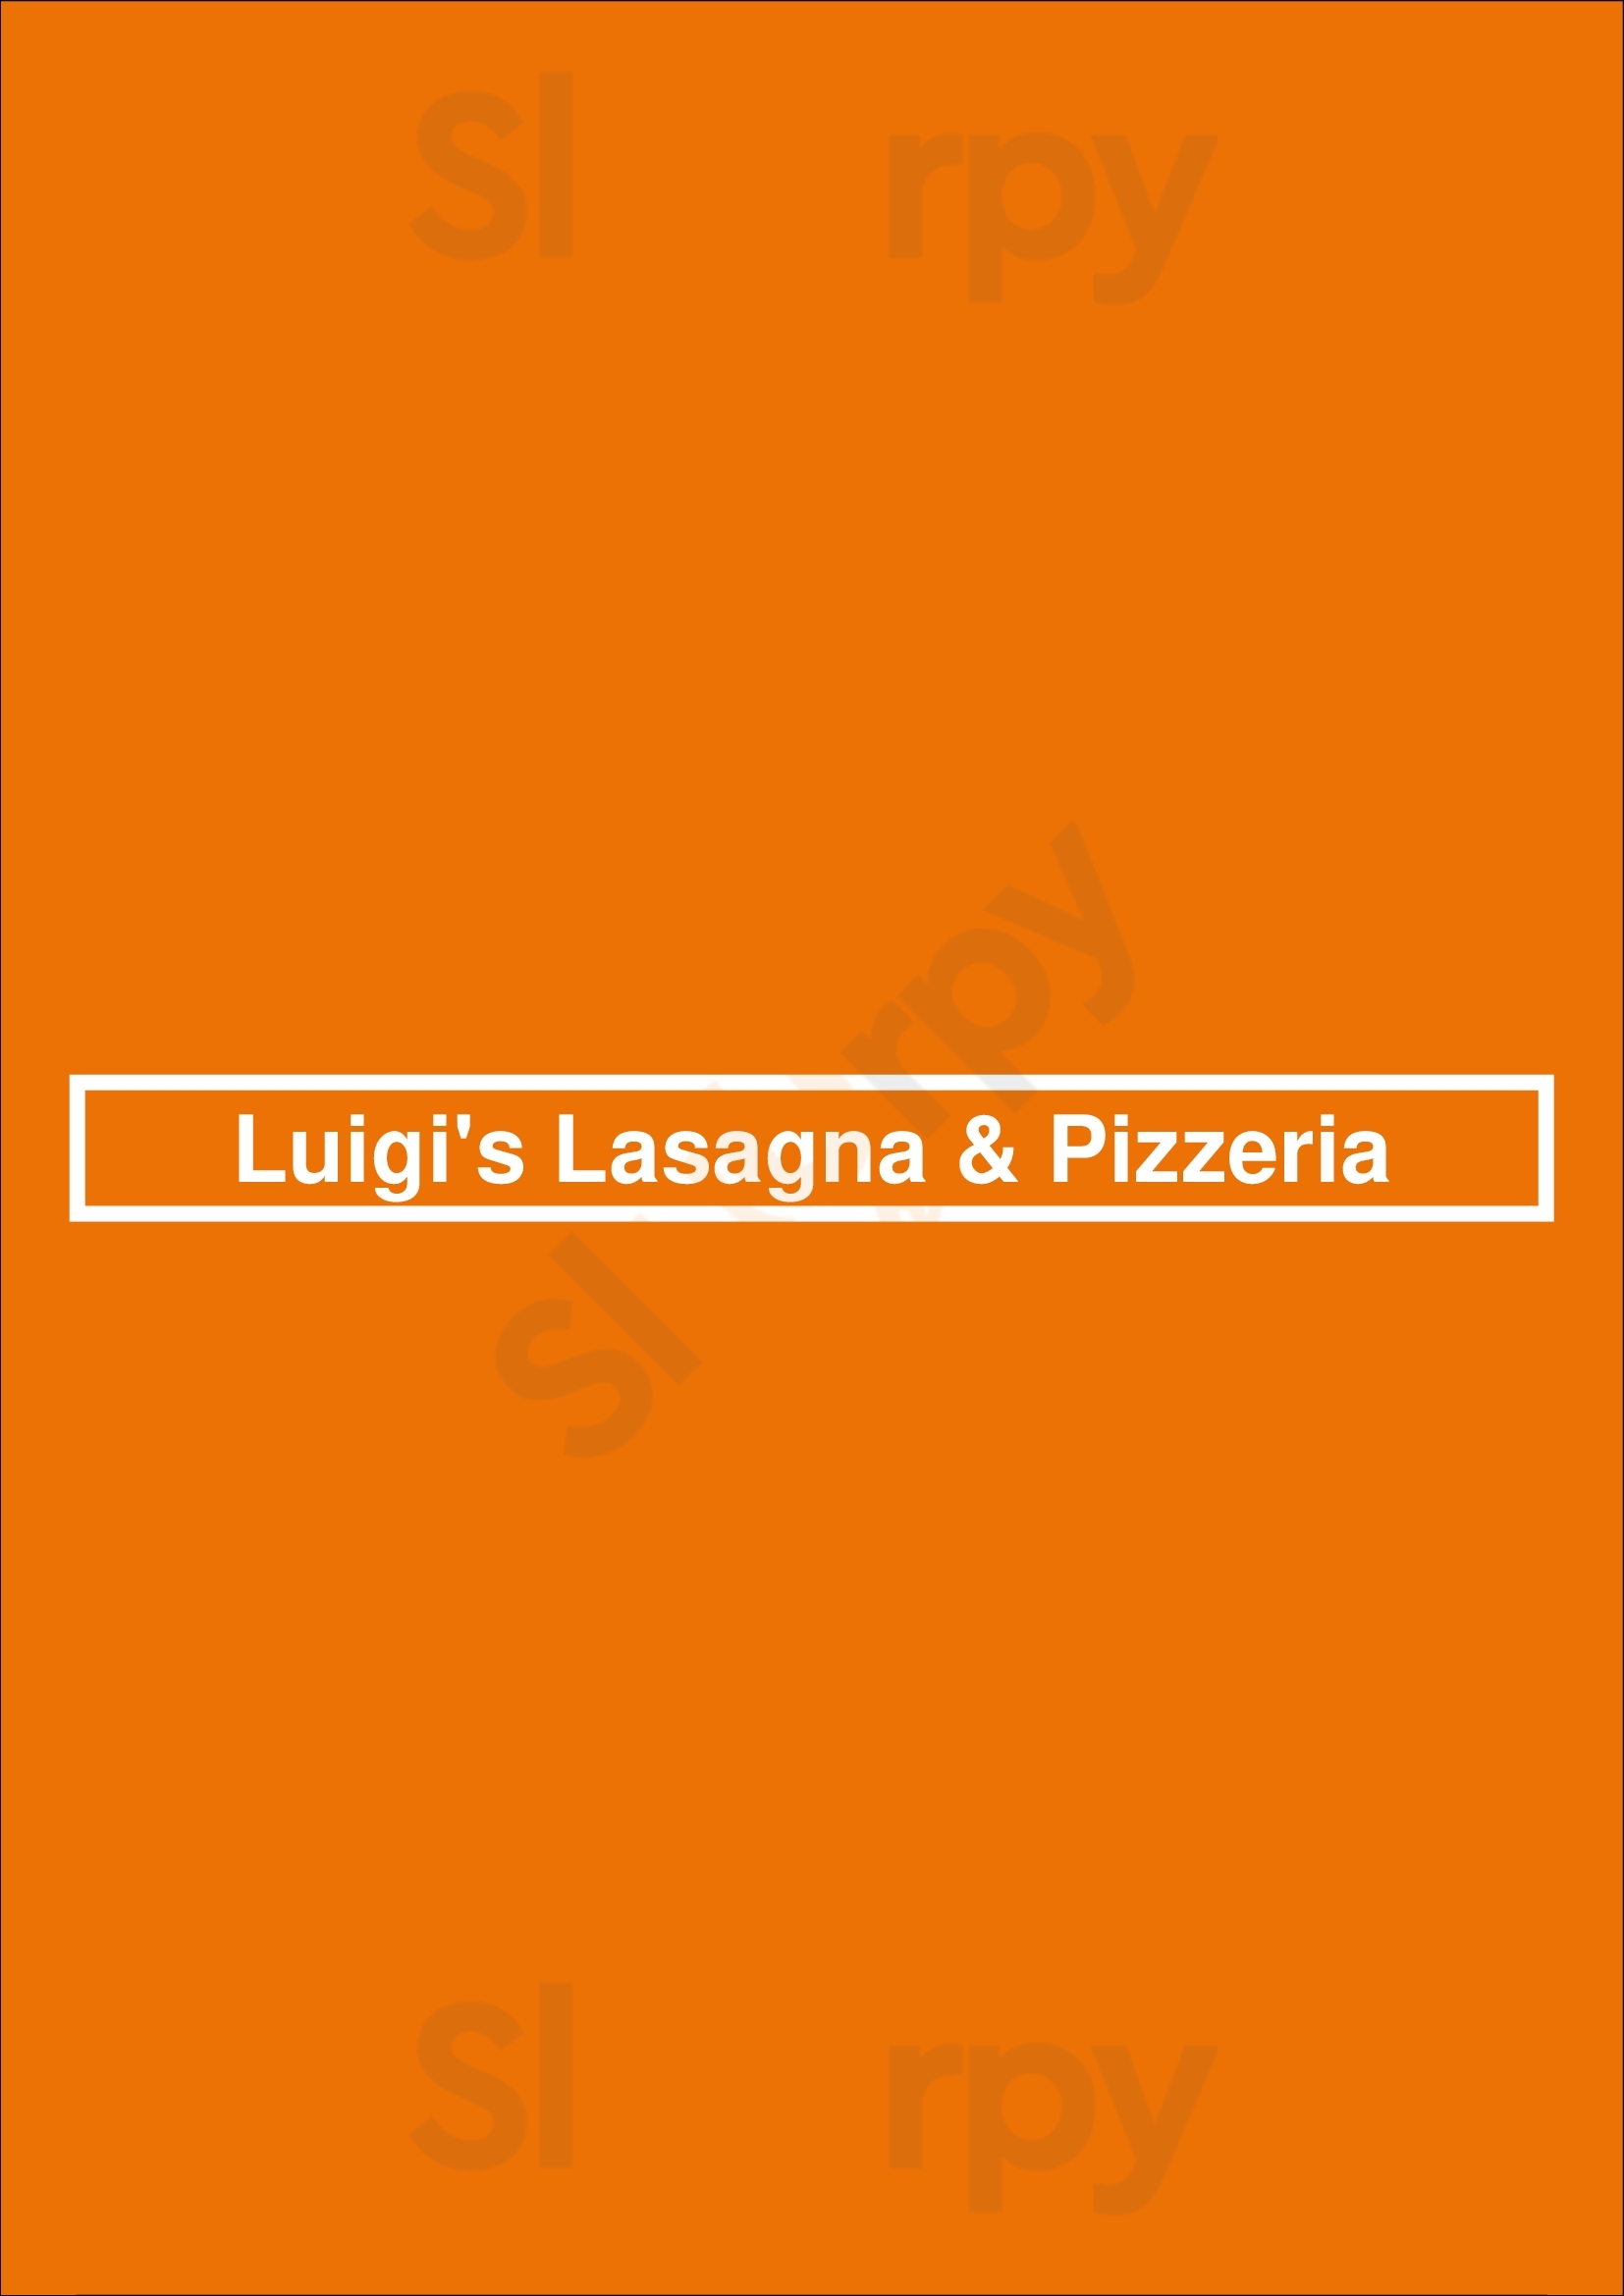 Luigi's Lasagna & Pizzeria Milton Menu - 1